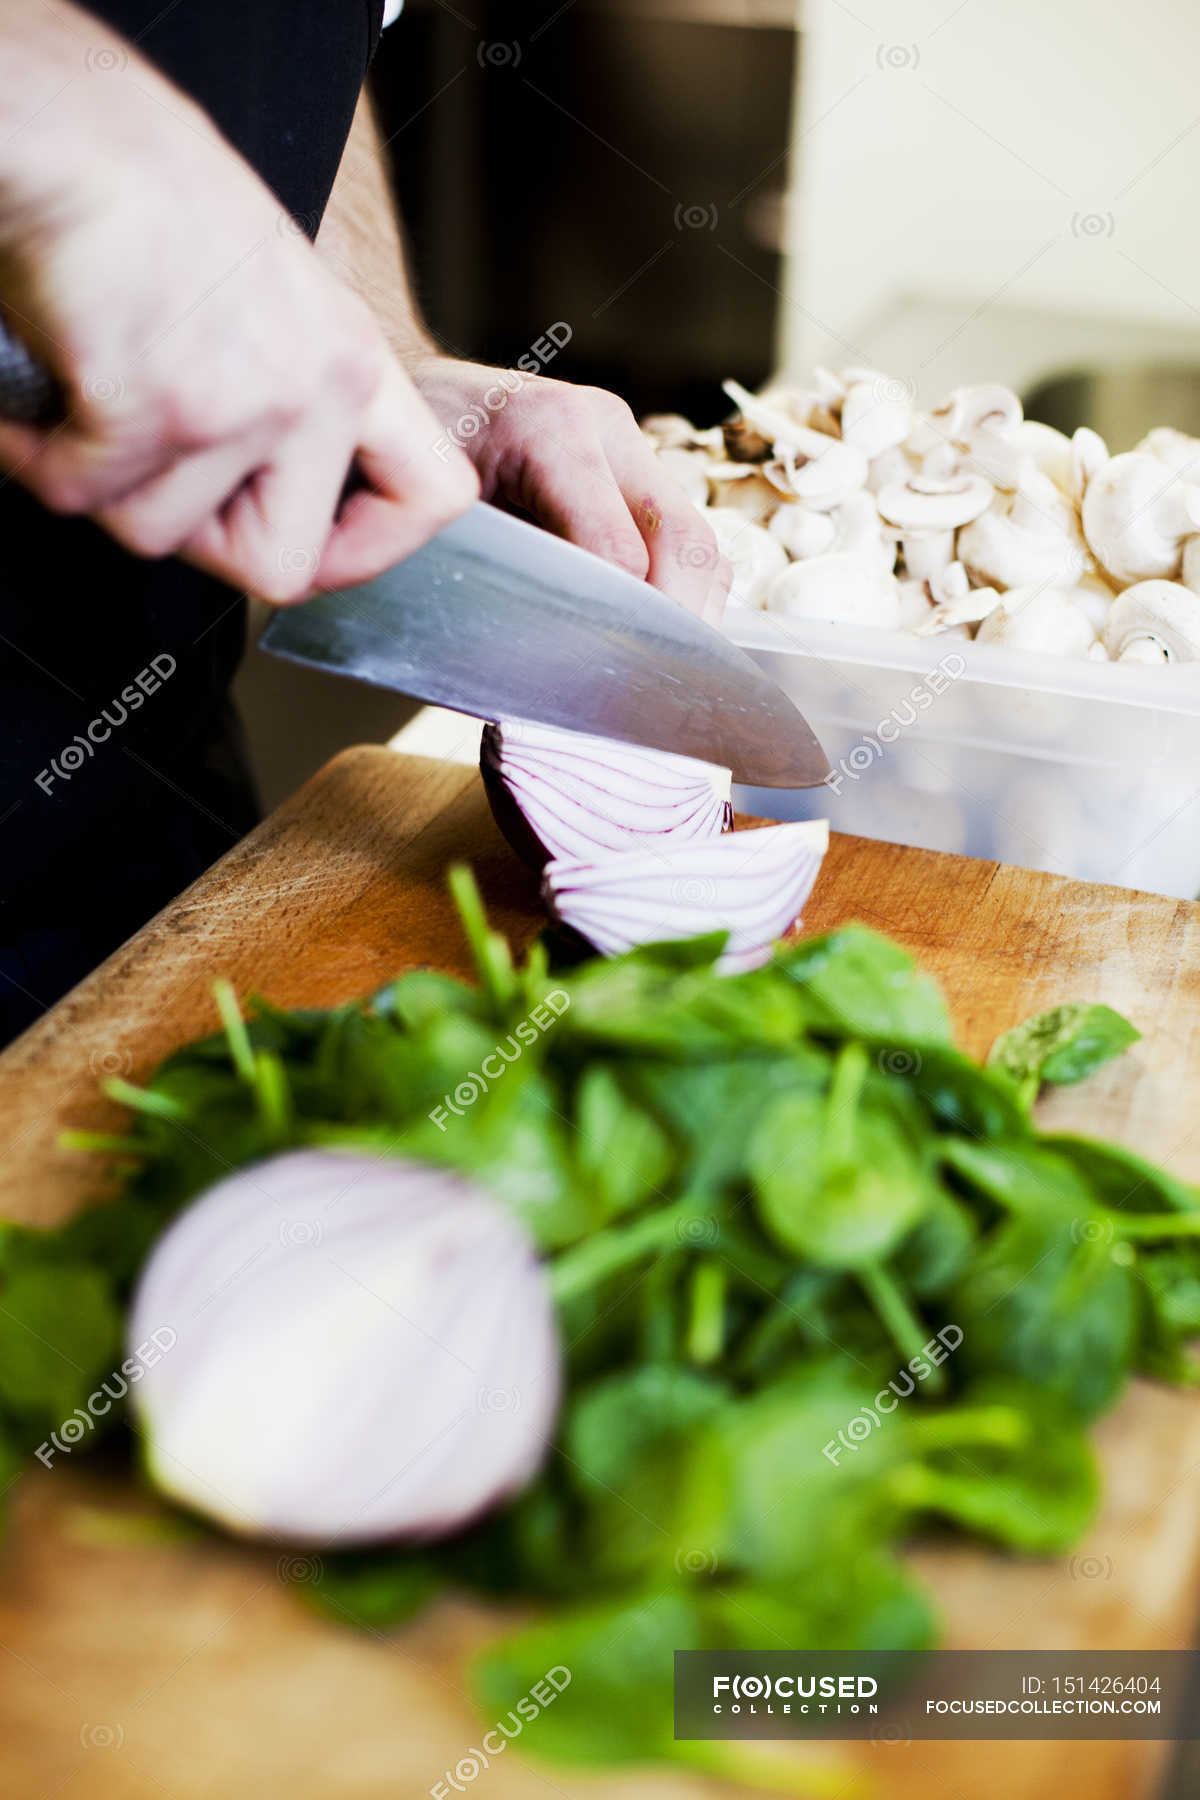 Focused 151426404 Stock Photo Chef Cutting Onion 